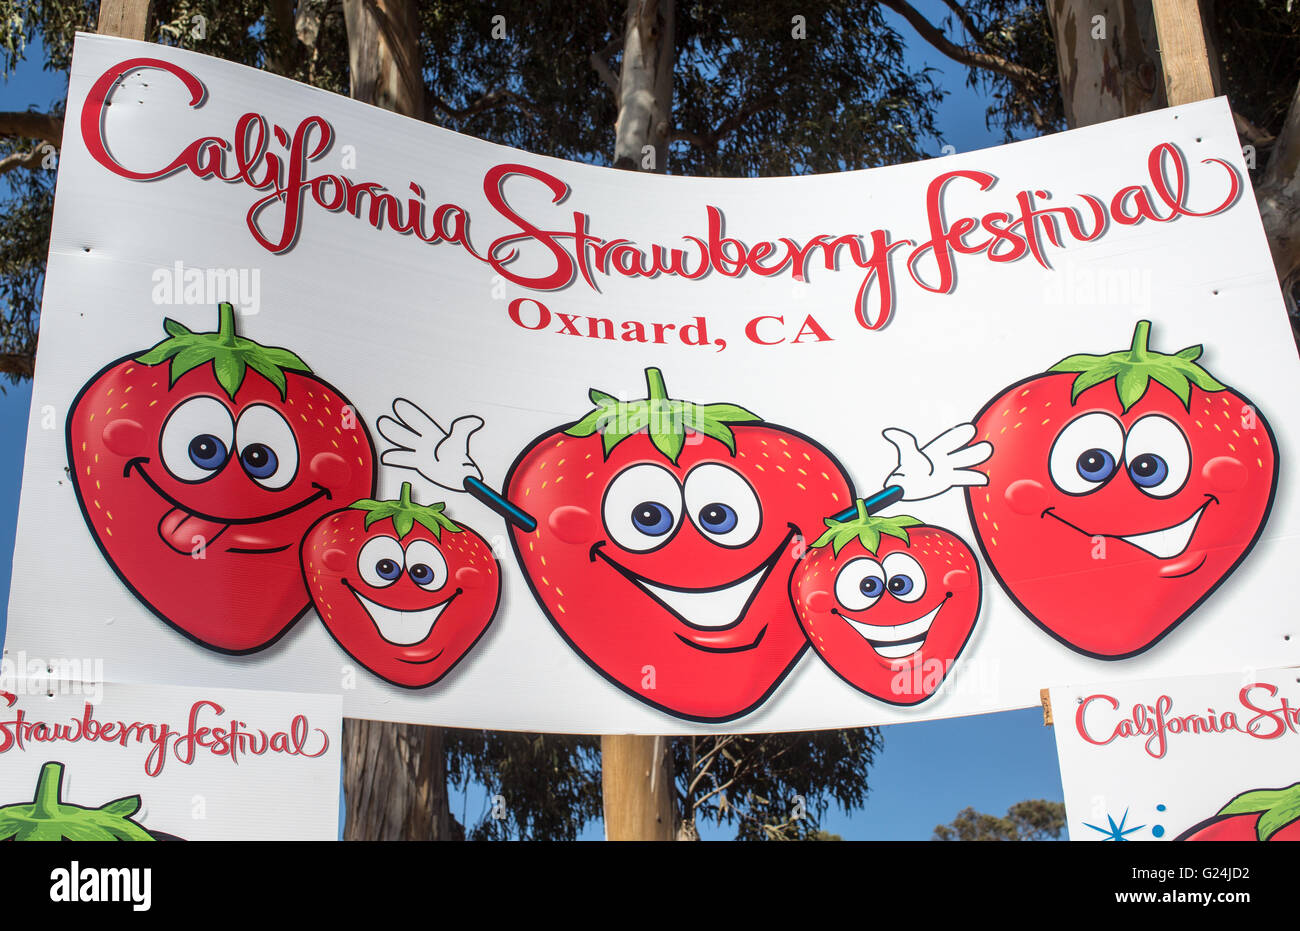 California Strawberry Festival sign in Oxnard, California Stock Photo